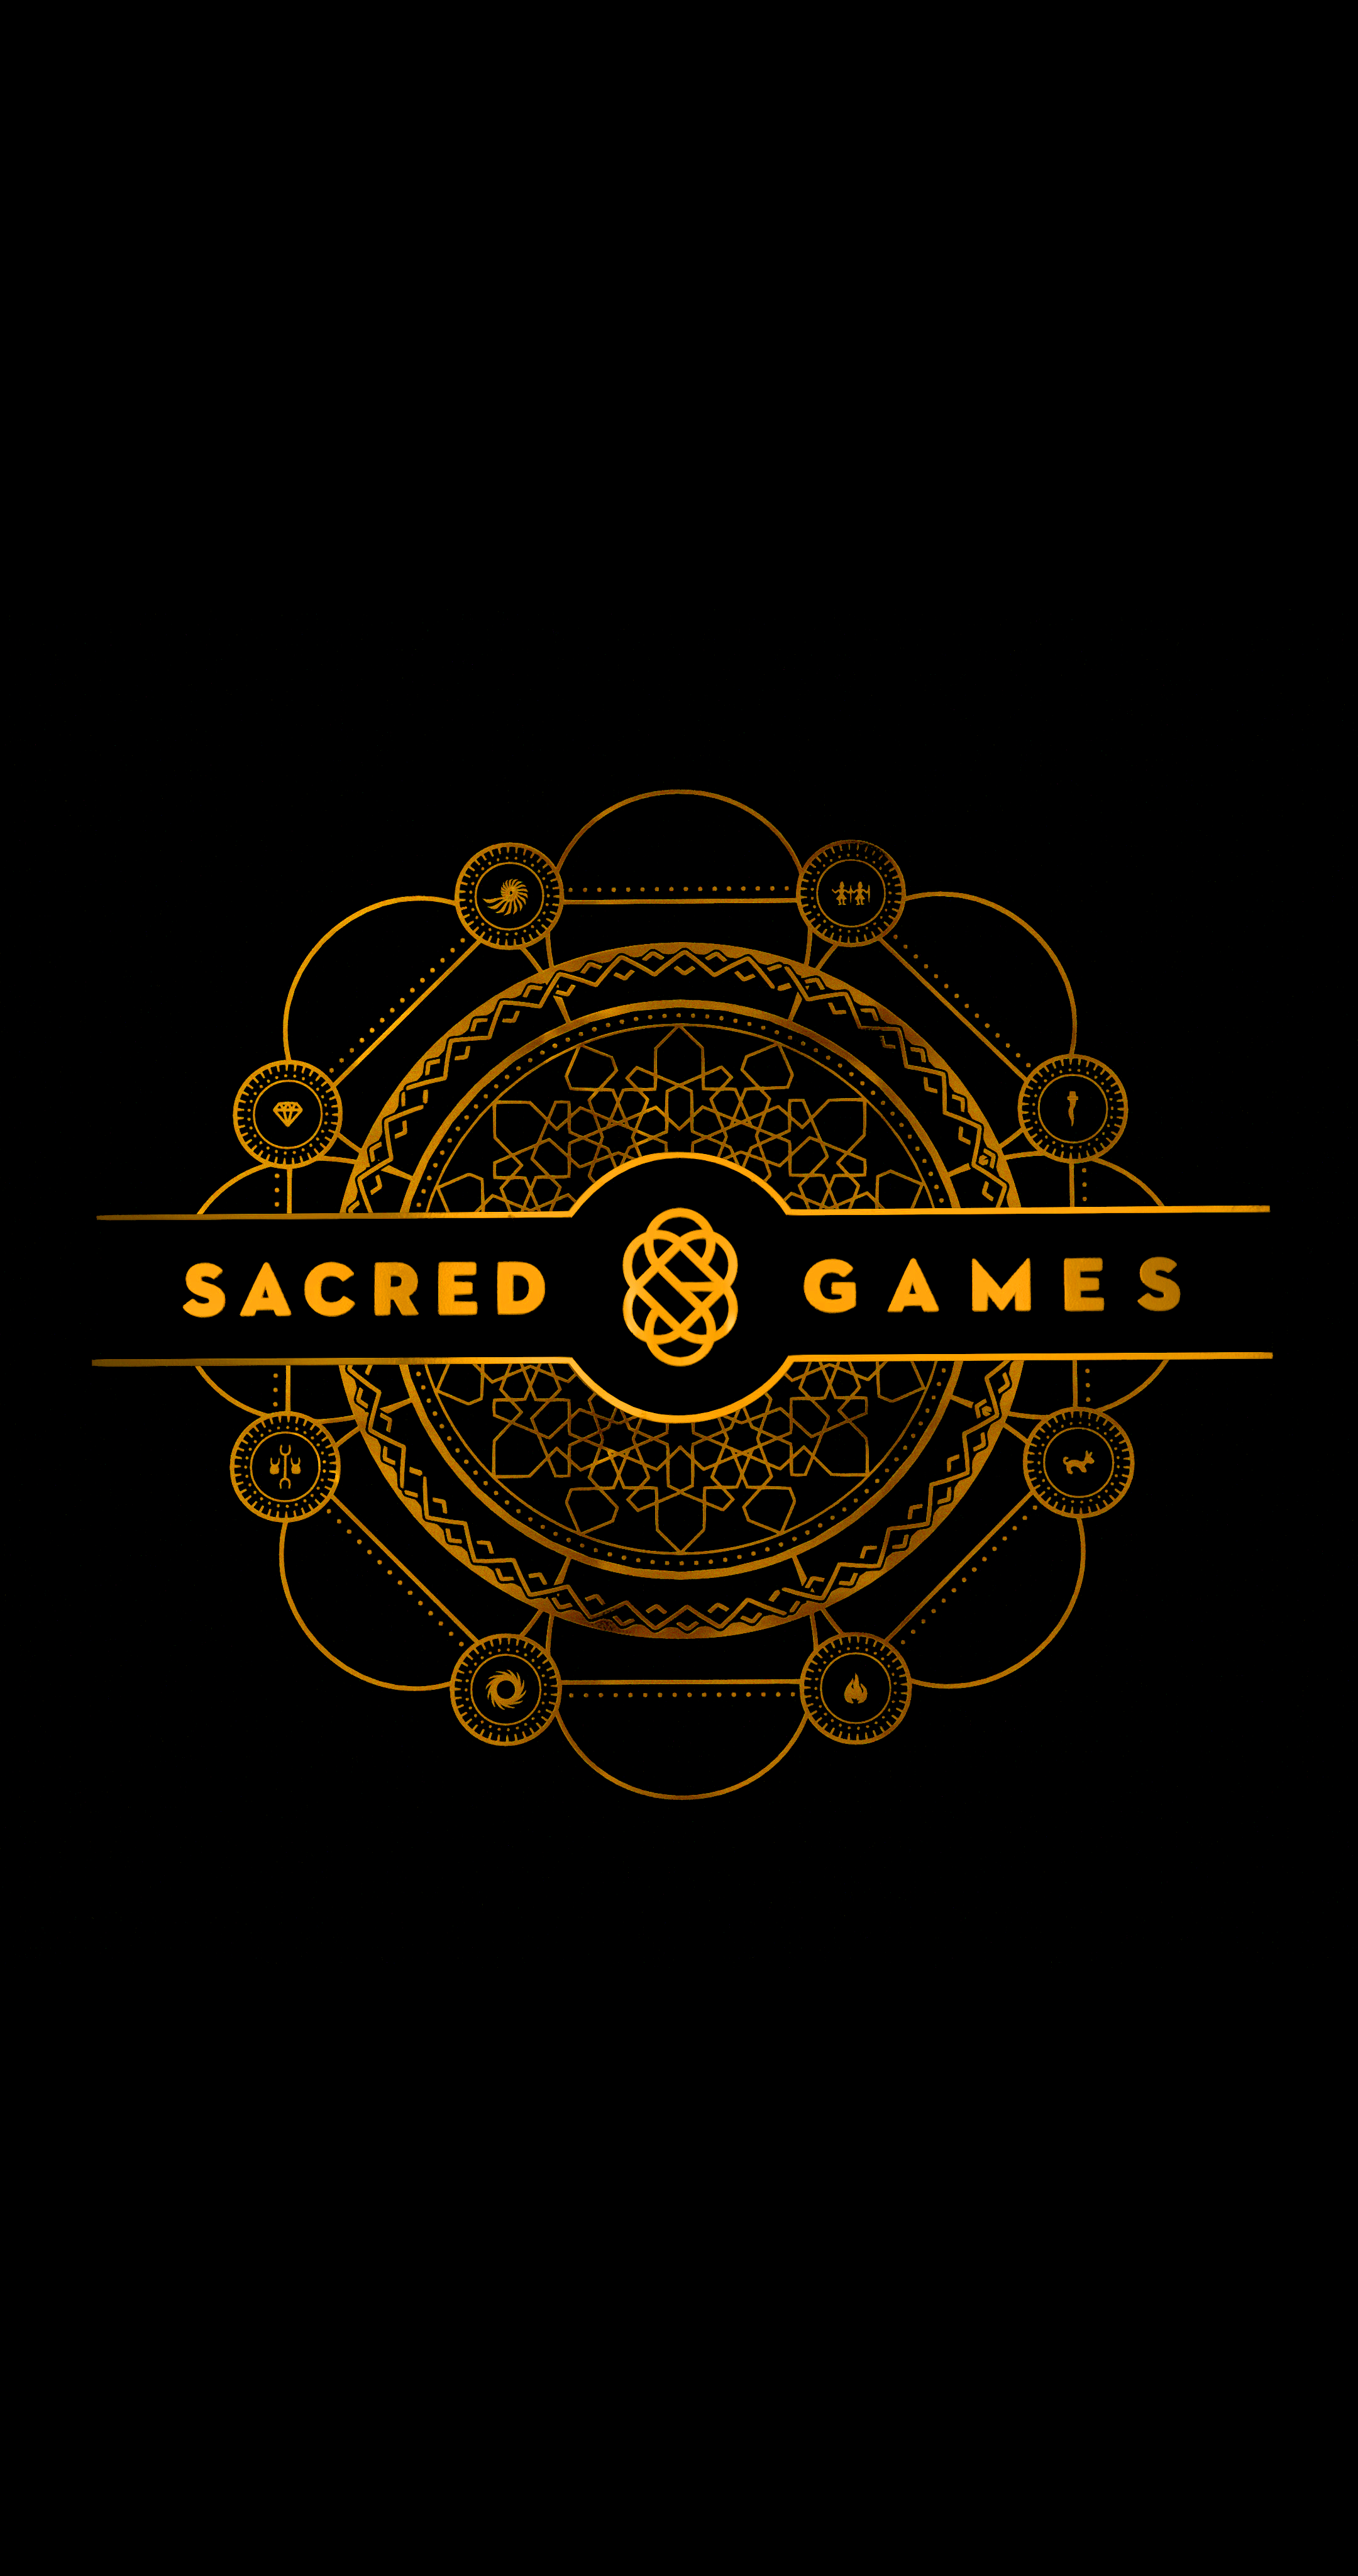 Sacred Games amoled (true black) 4k mobile wallpaper